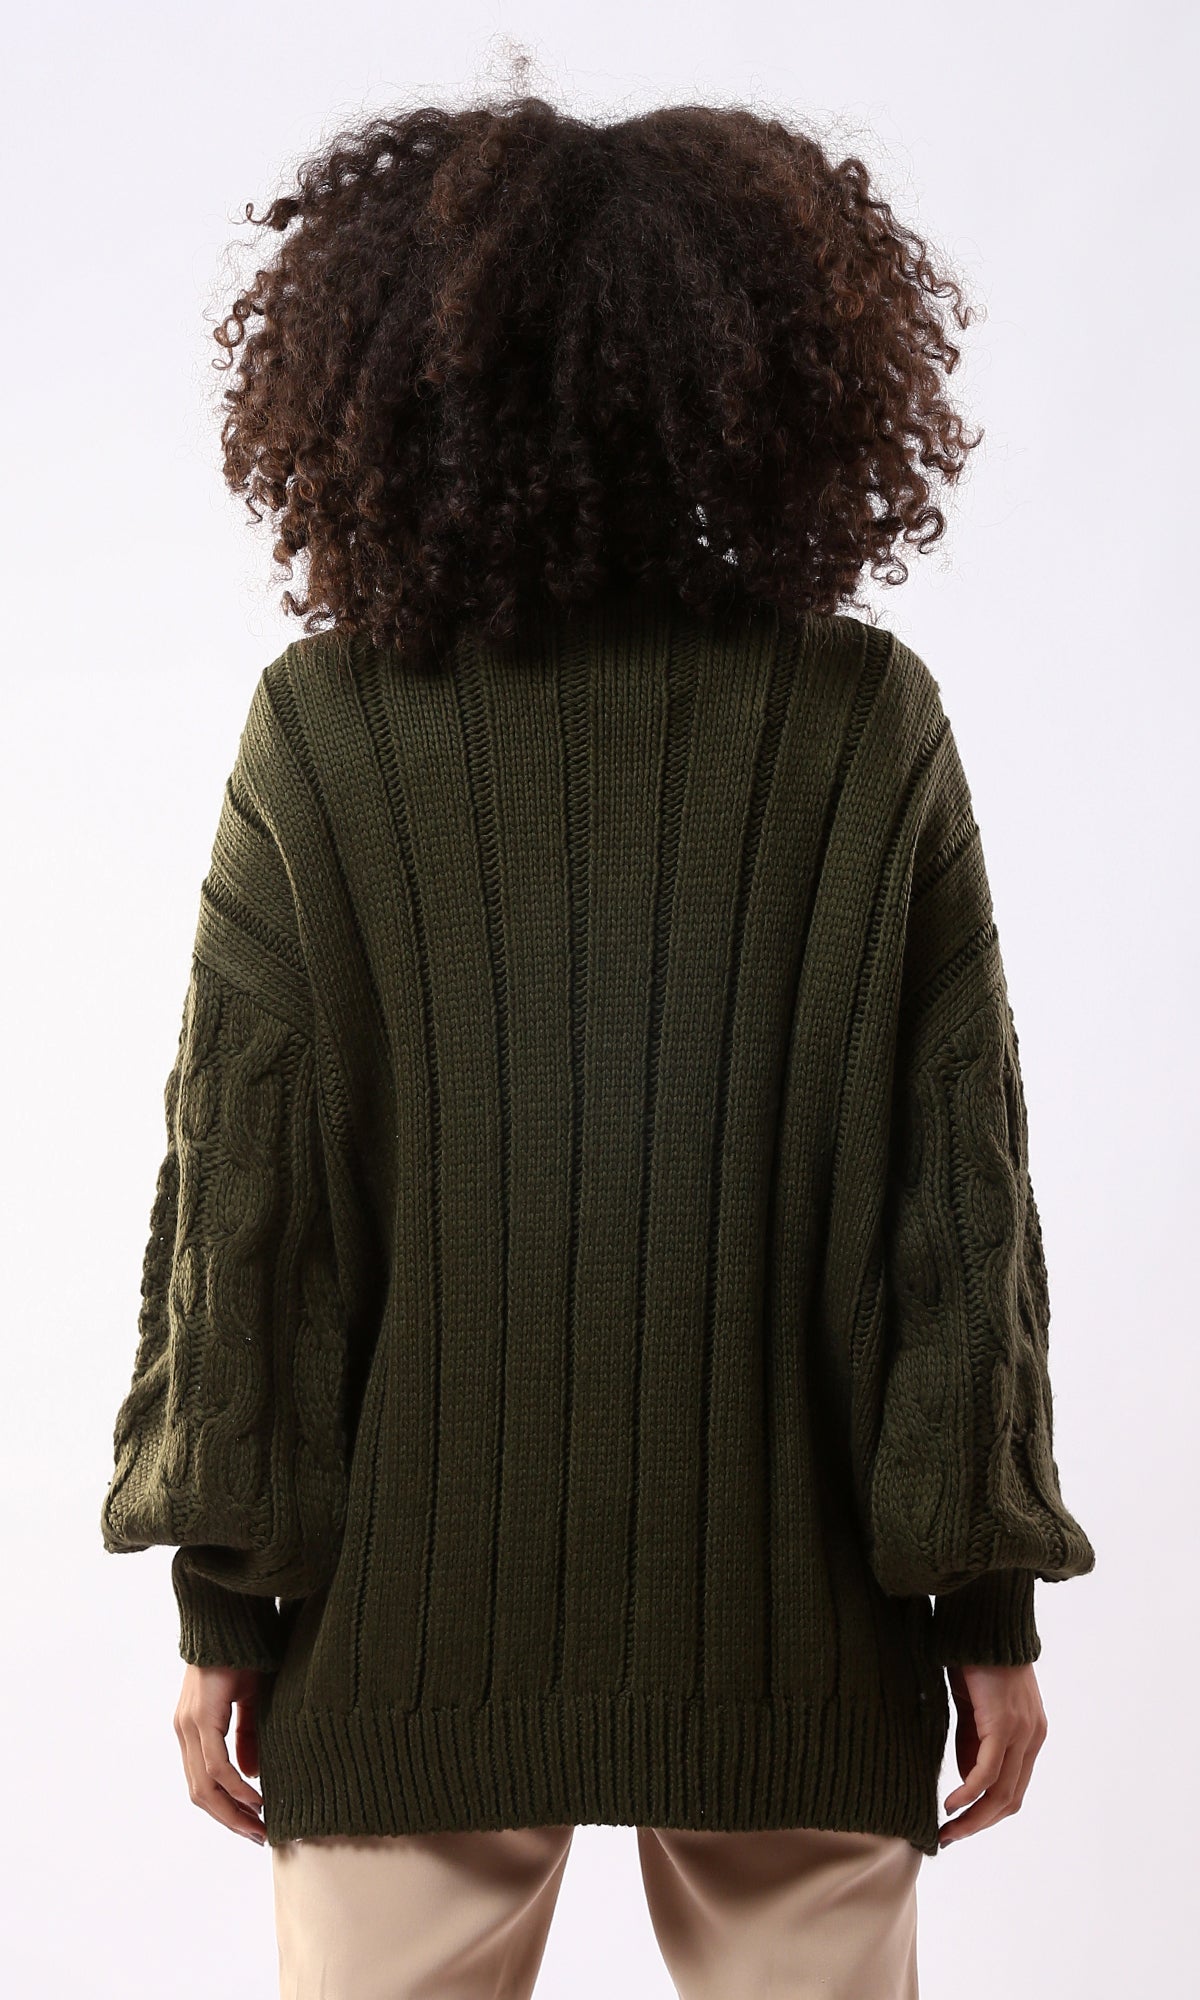 O168920 Mock Neck Knitted Dark Olive Long Pullover